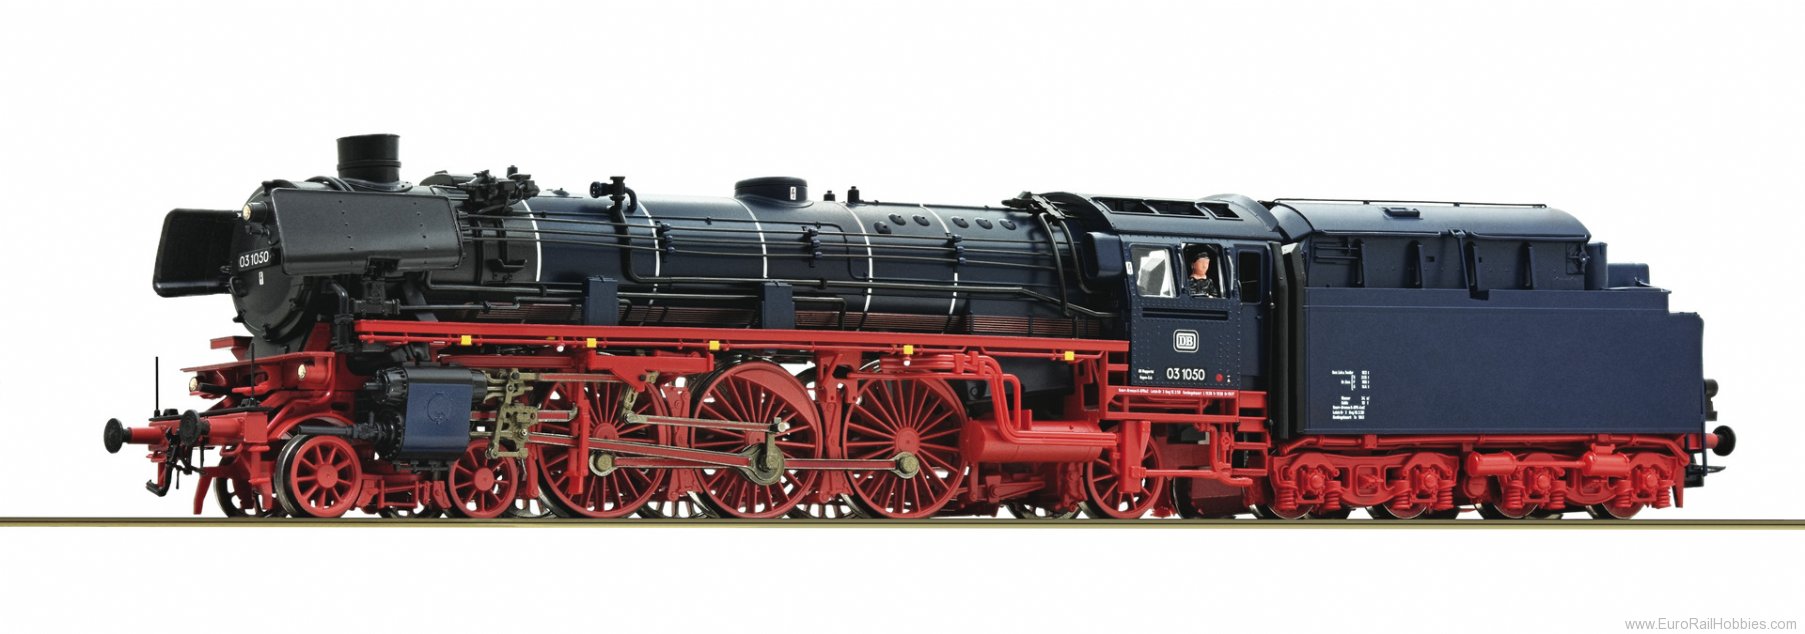 Roco 70031 Steam locomotive class 03.10, DB (Digital Sou